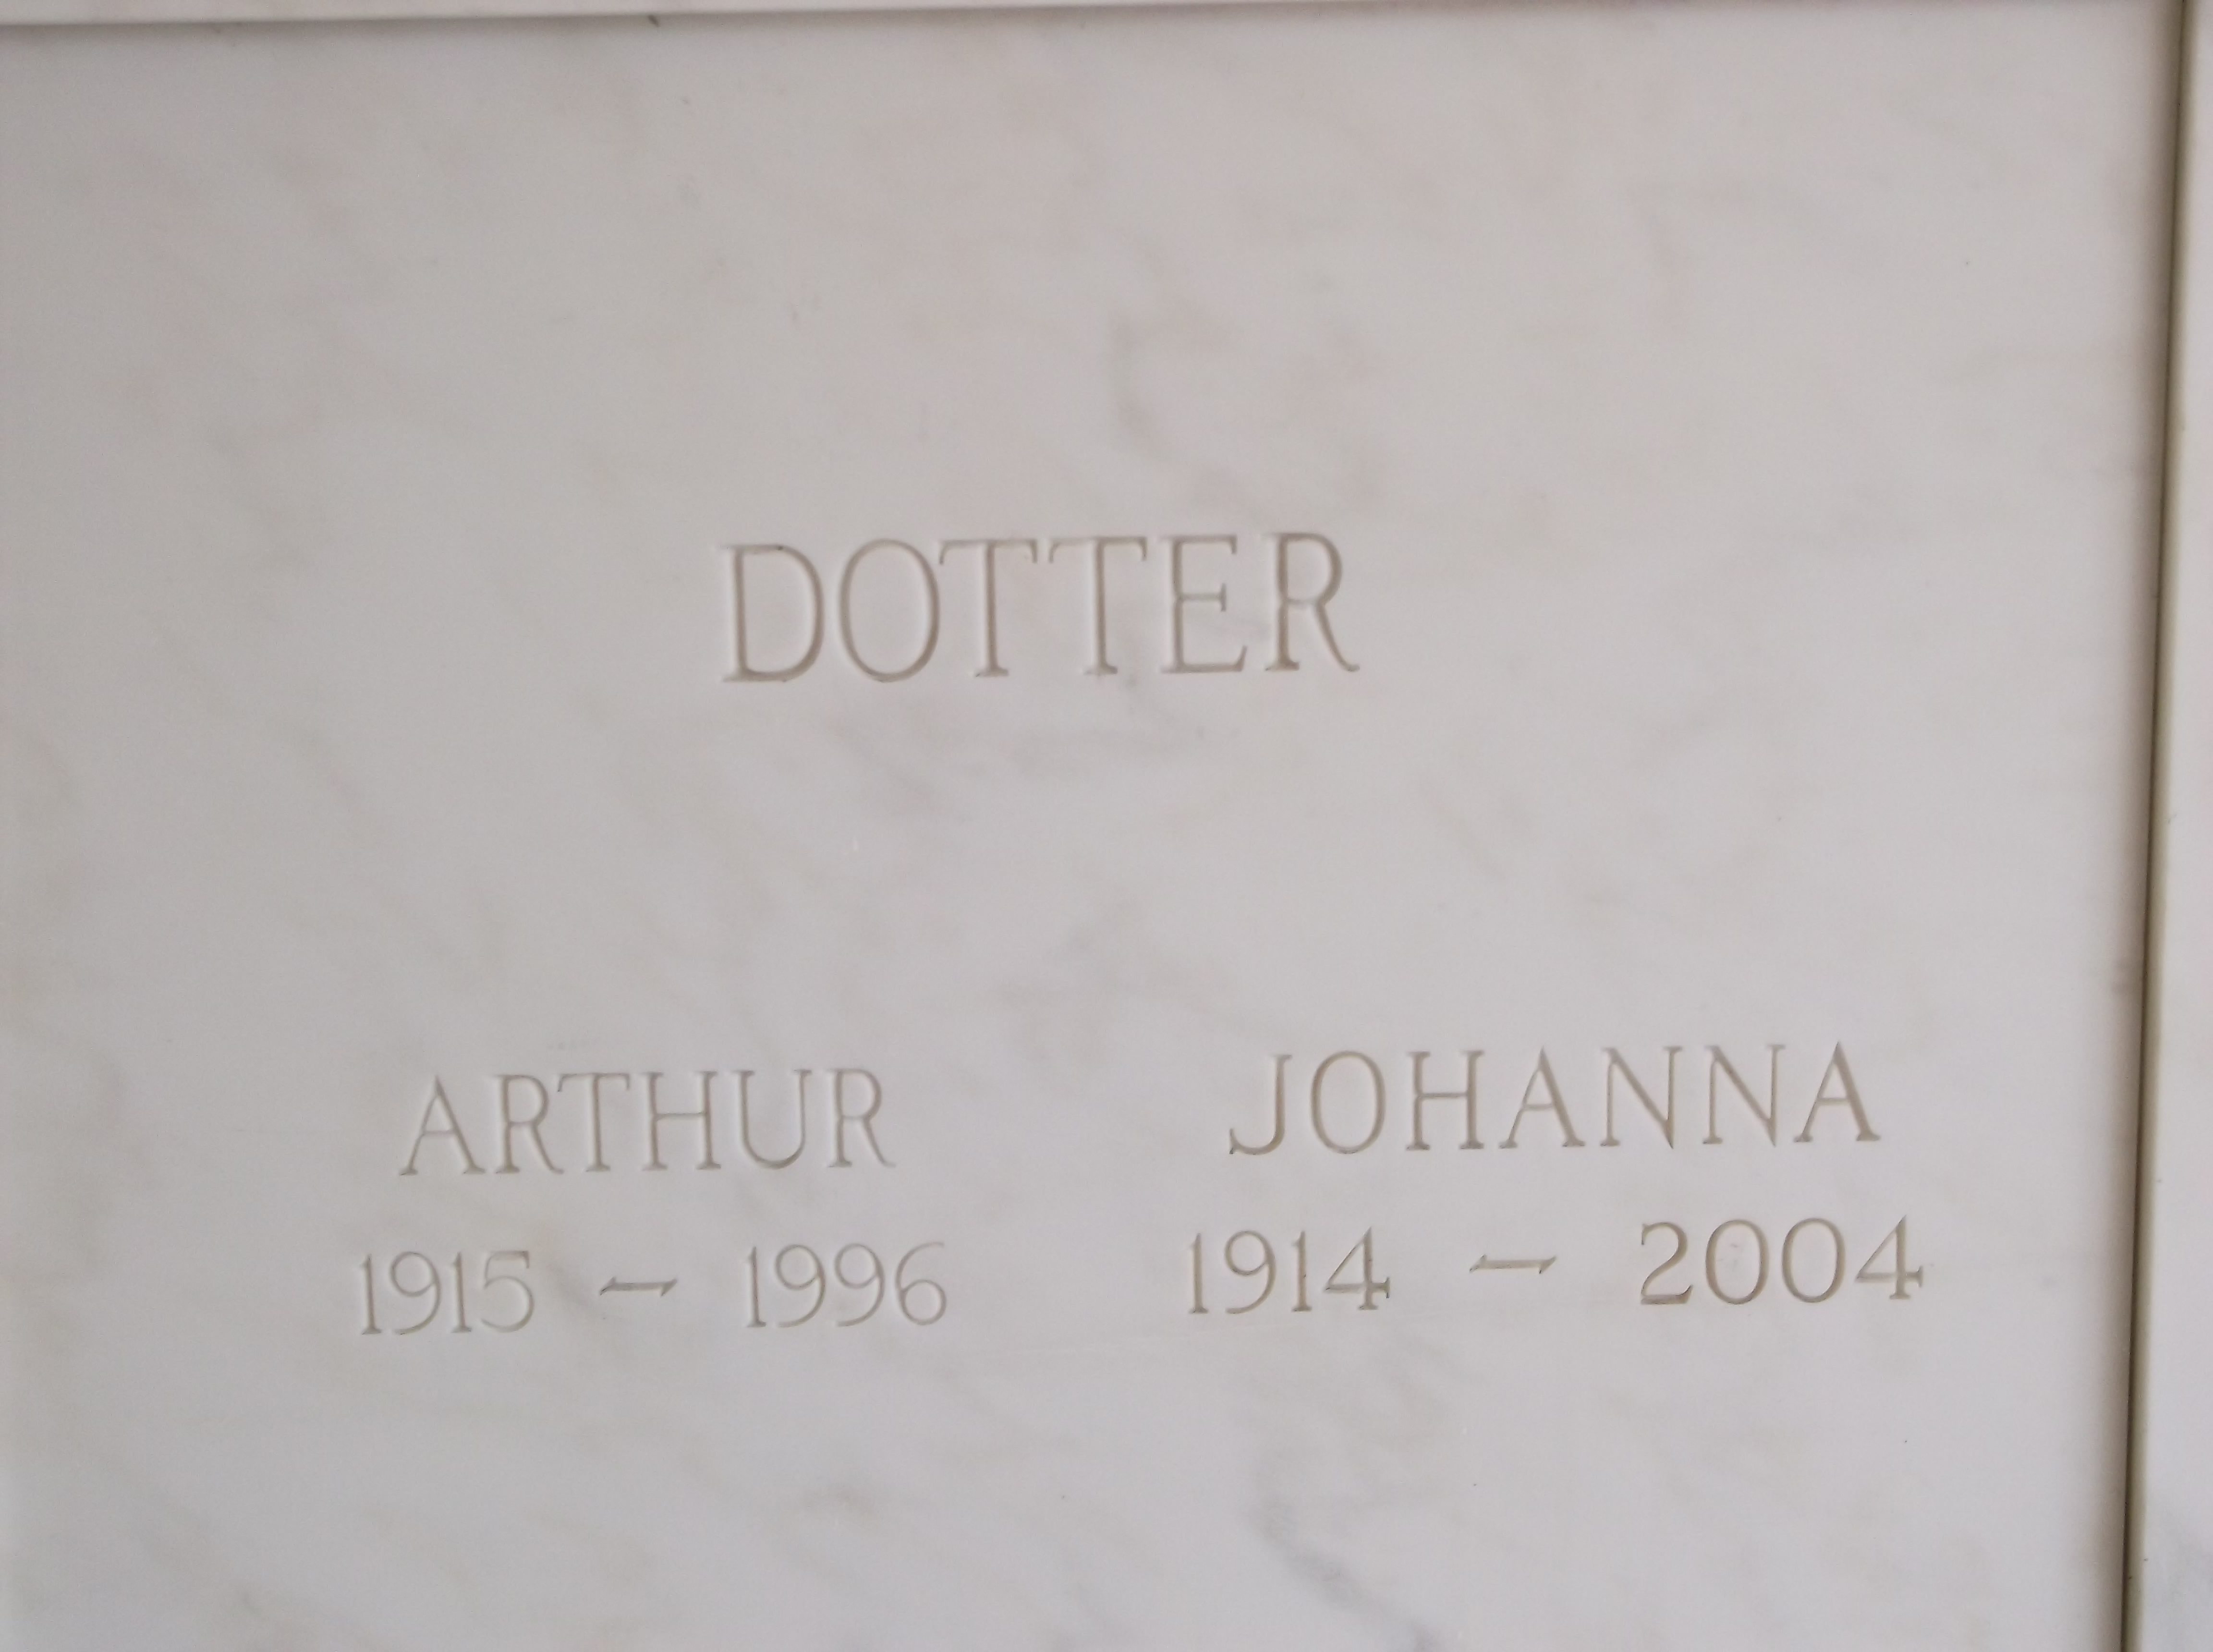 Arthur Dotter